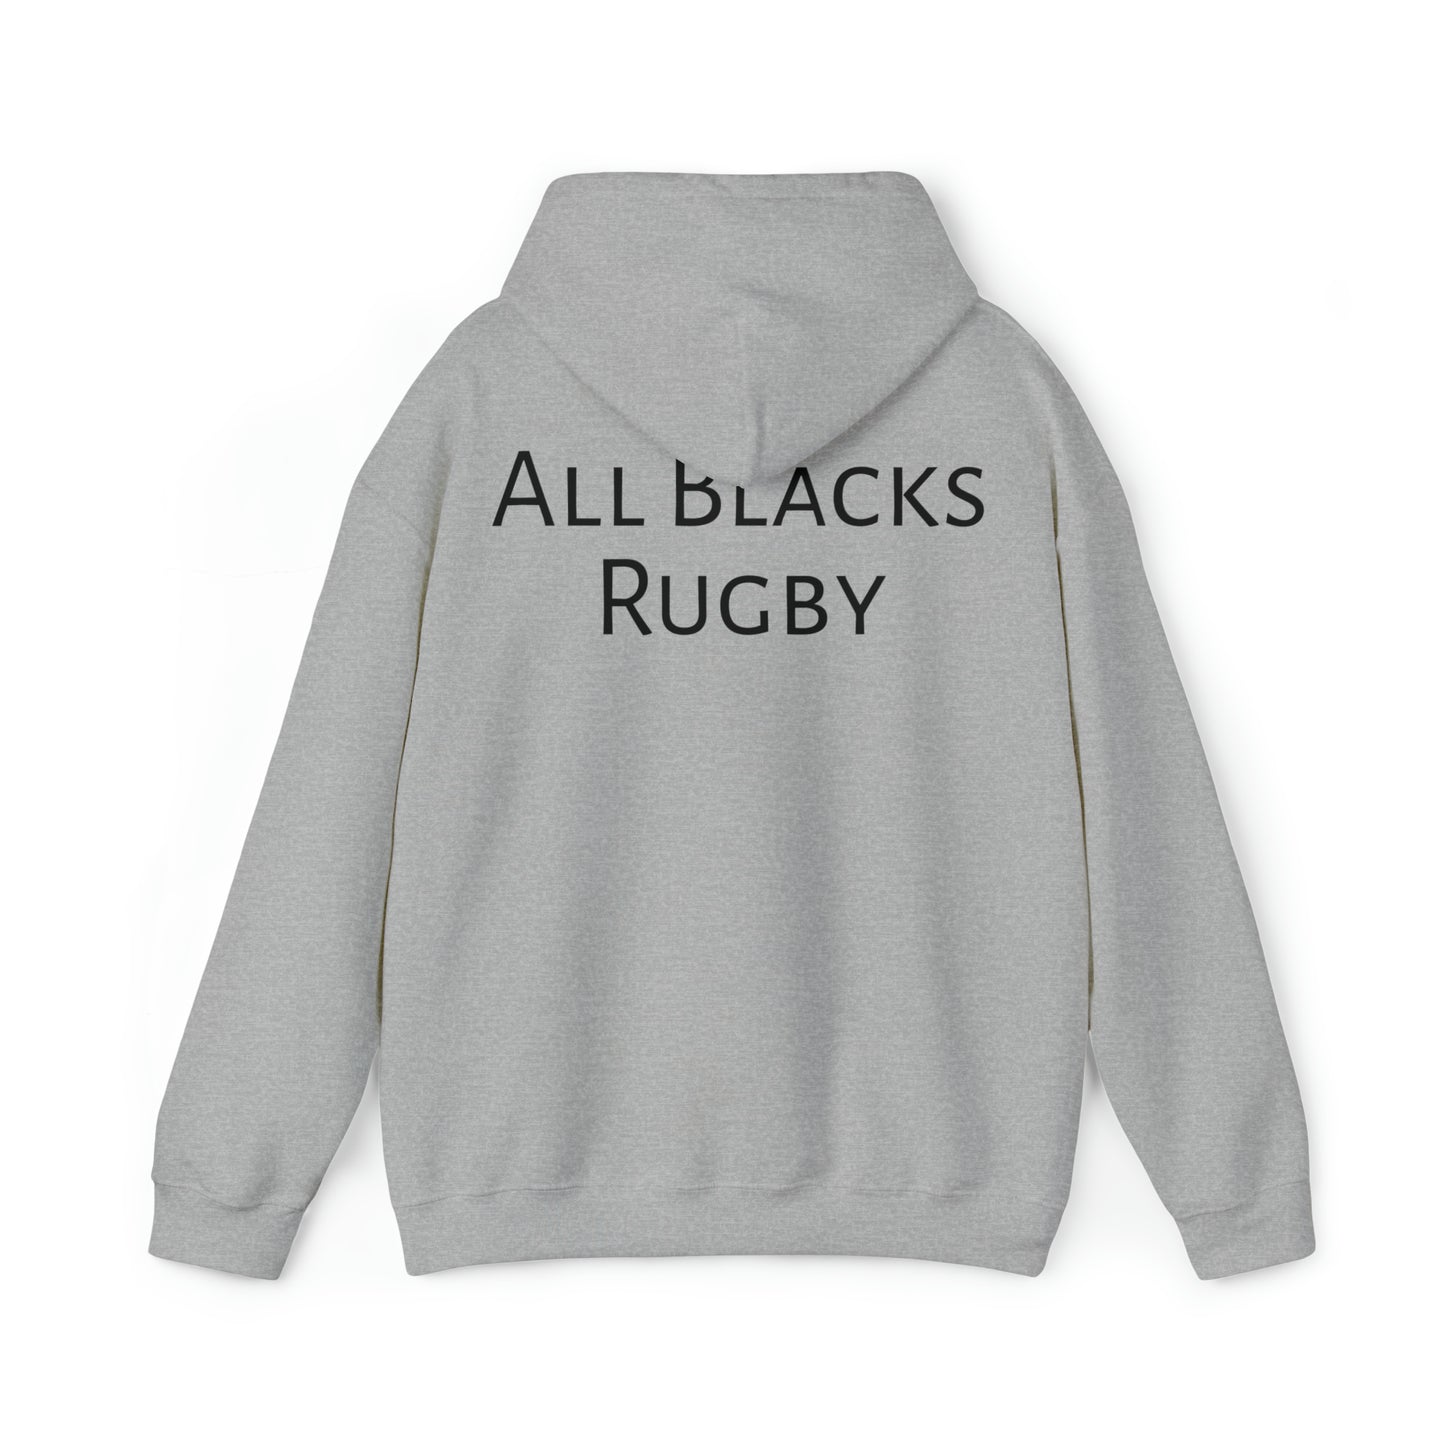 All Blacks World Cup Winners - light hoodies